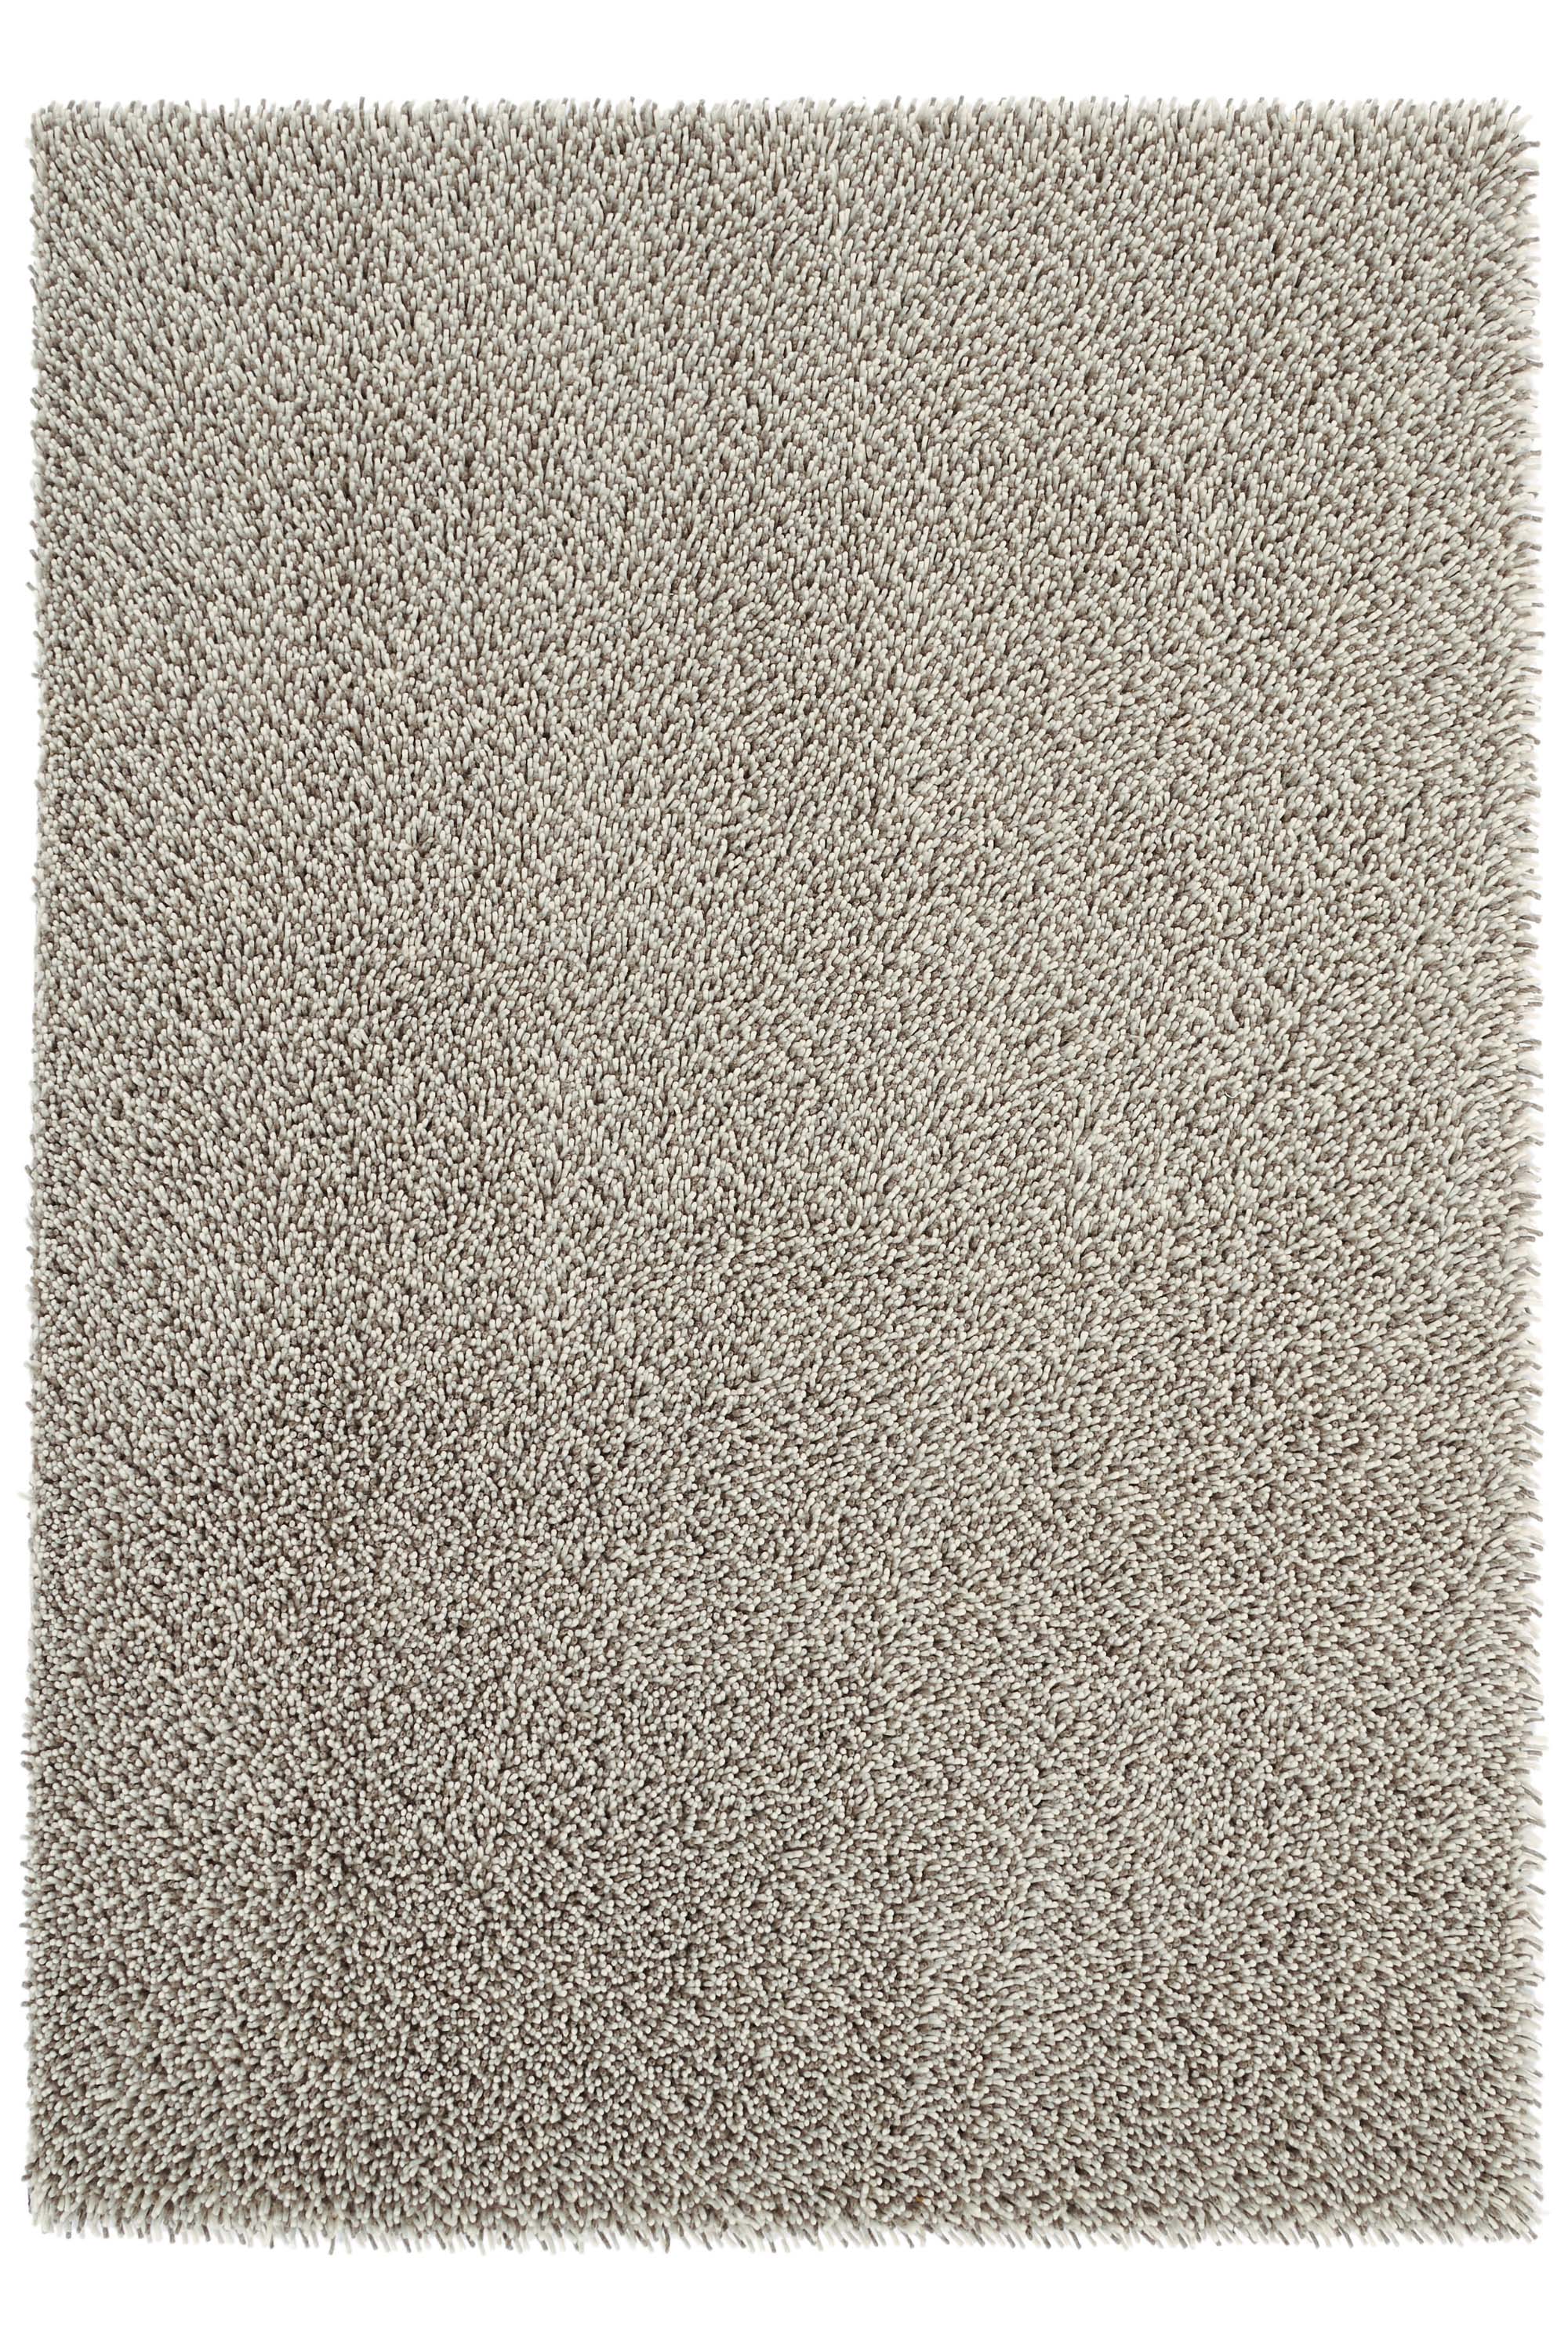 grey shagpile area rug